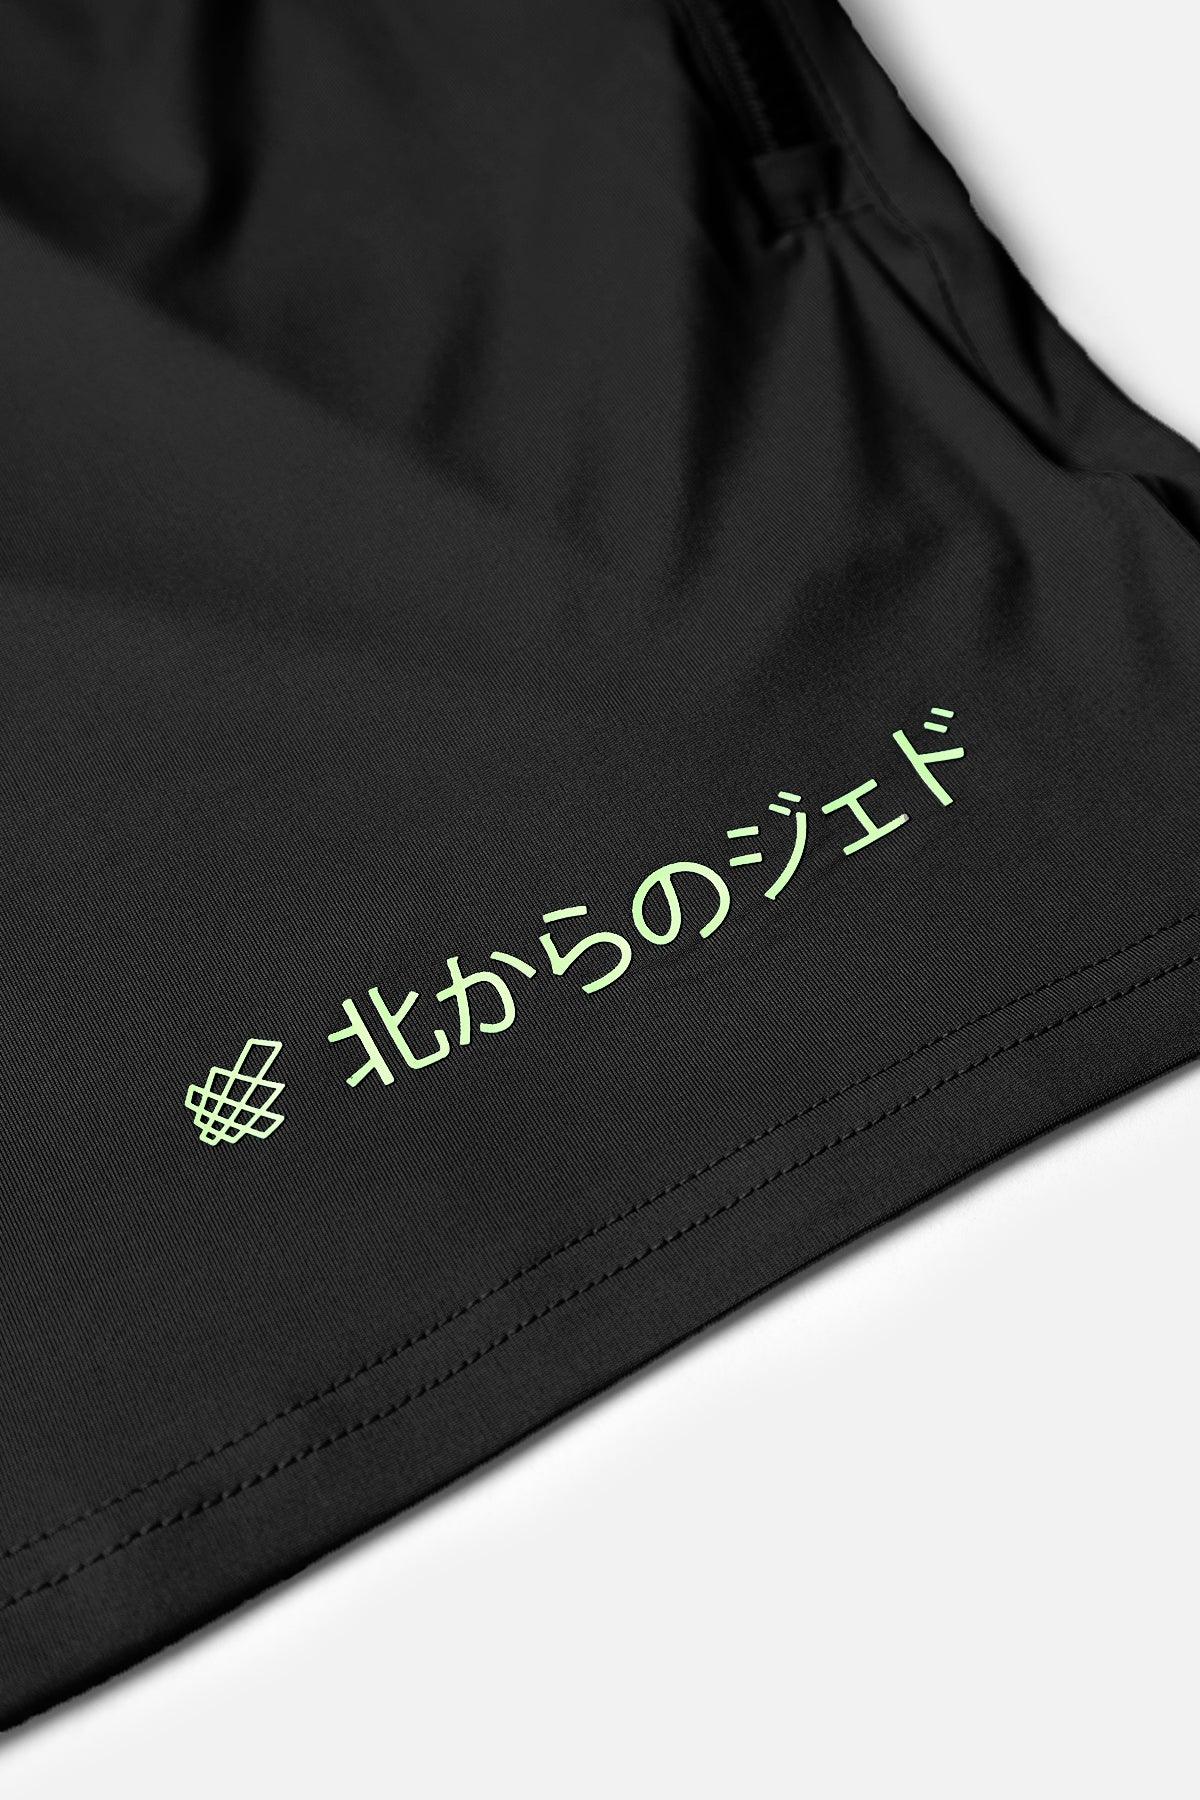 Agile Bodybuilding 4'' Shorts w Zipper Pockets - Japanese Black - Jed North